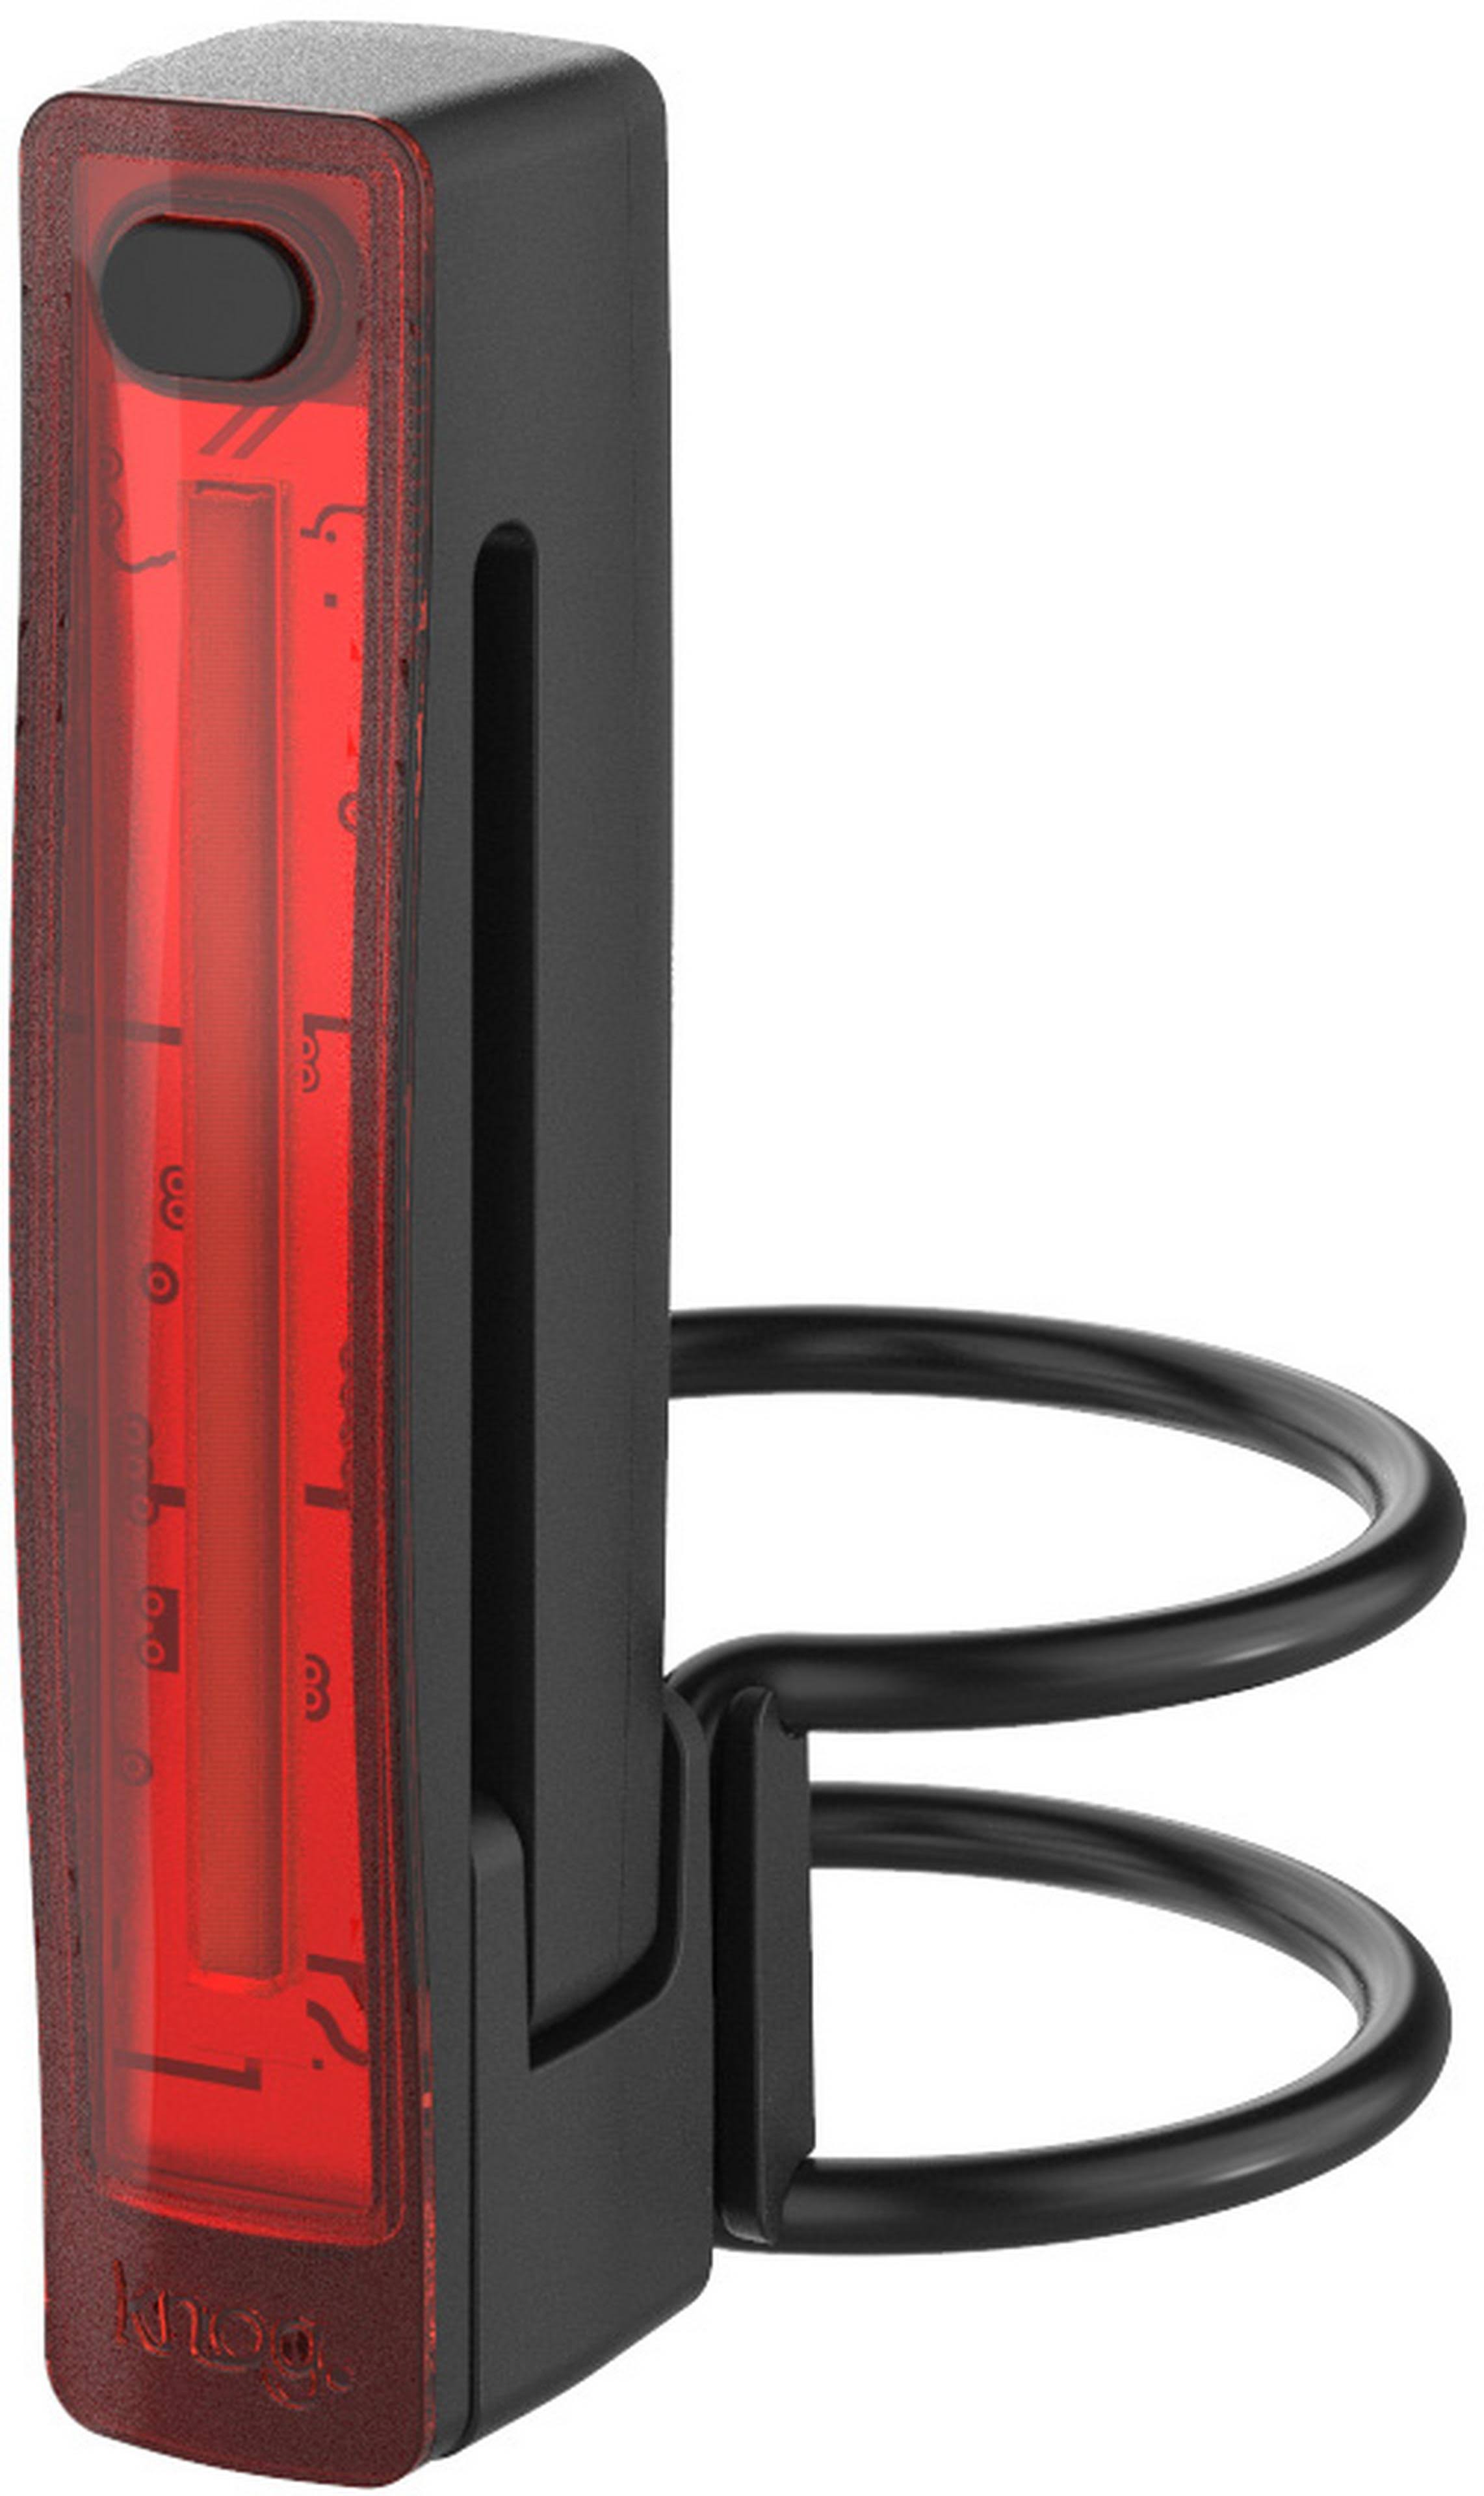 Knog Plus Rear Bike Light - Black, USB Rechargeable